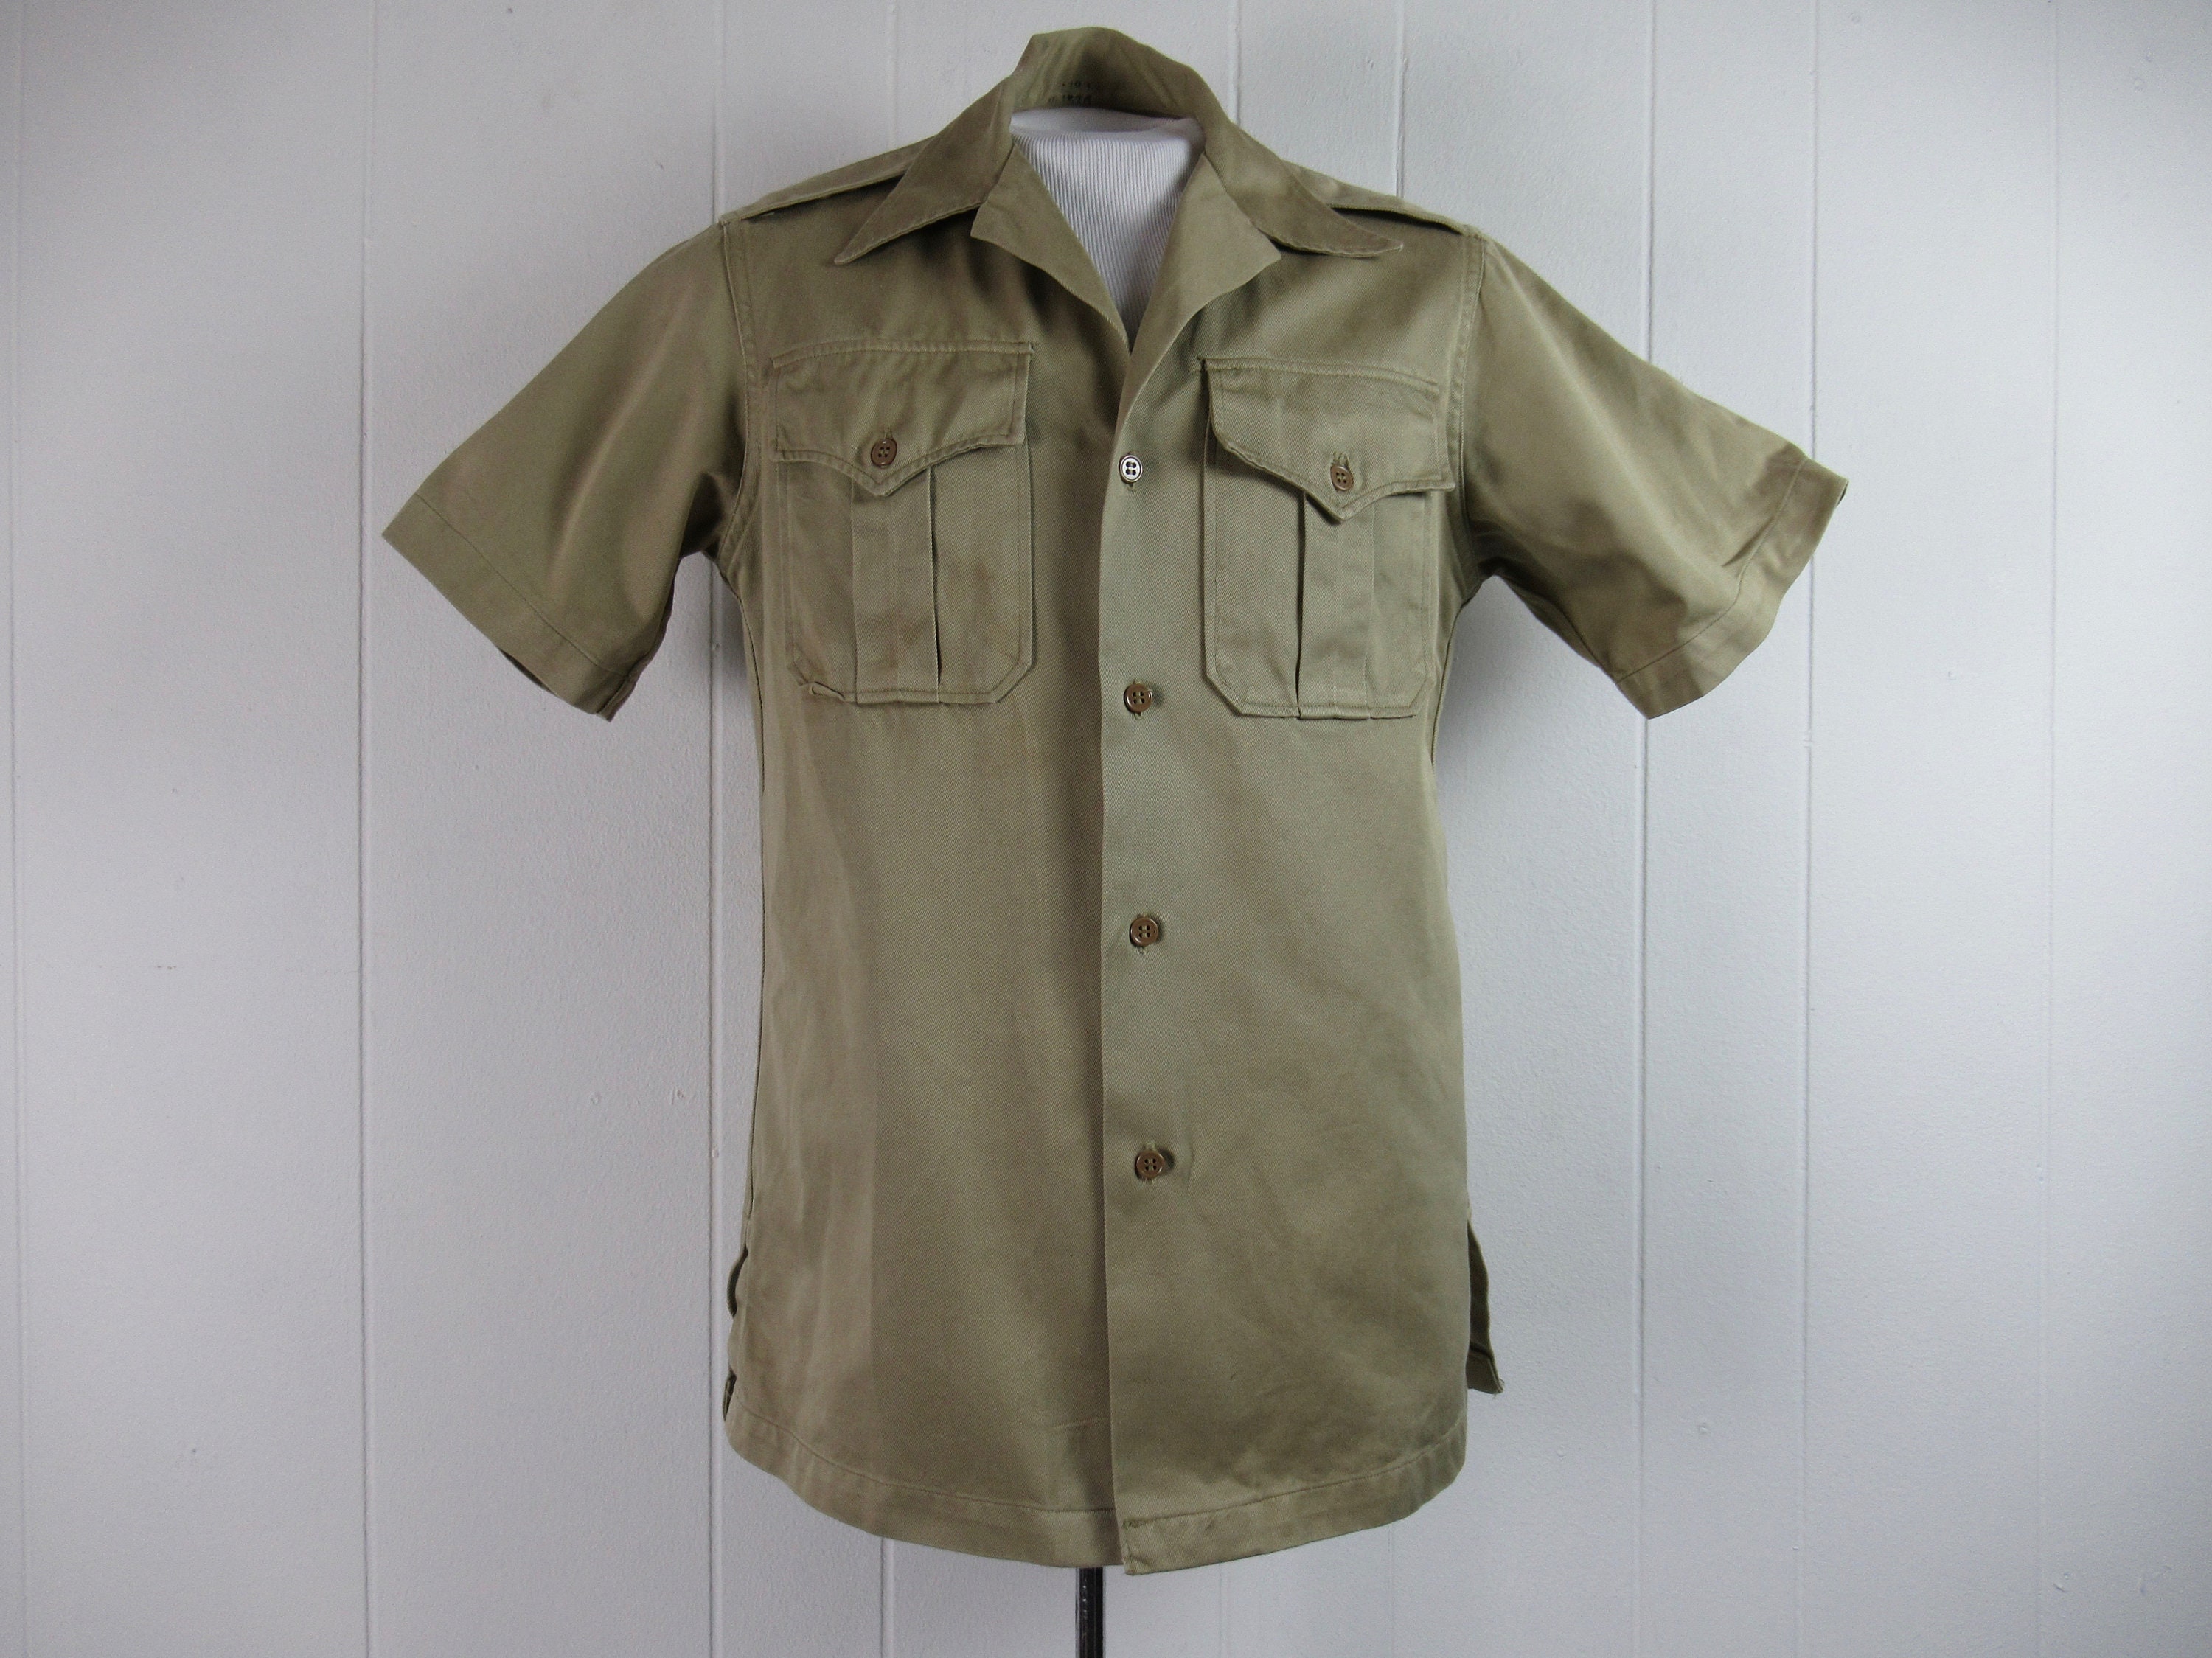 Vintage Shirt Military Shirt U.S. Army Shirt 1950s Shirt - Etsy